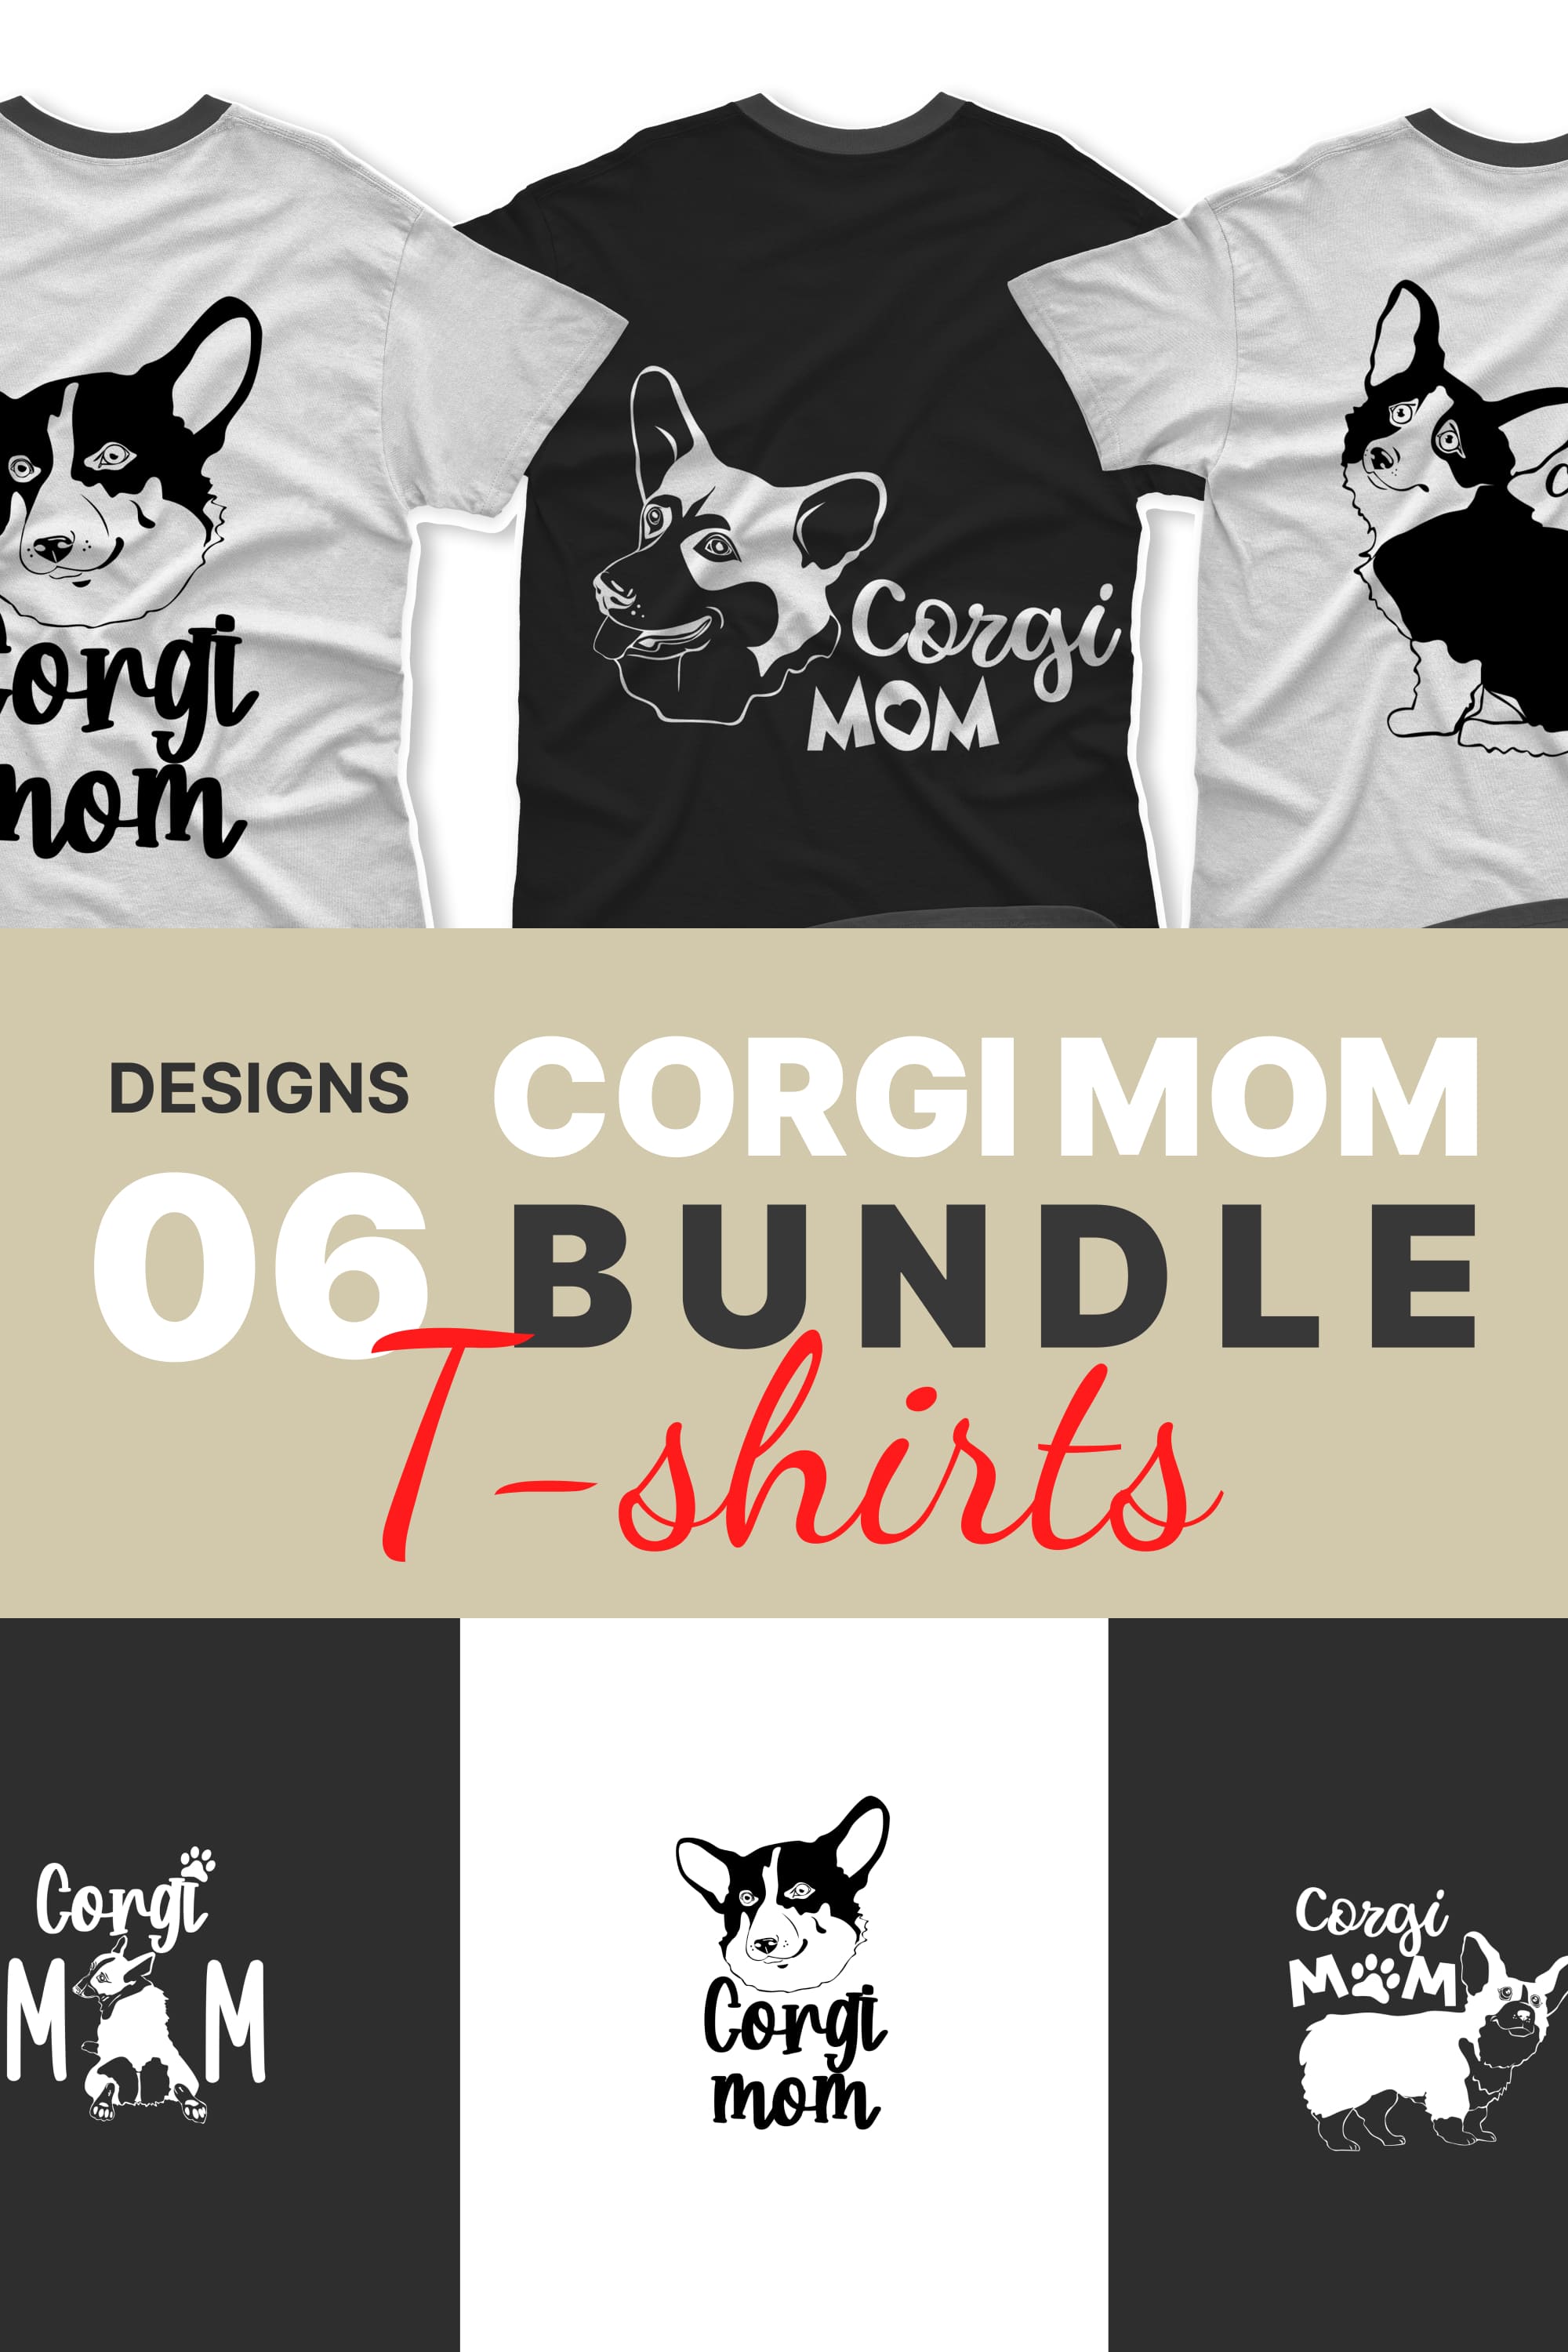 corgi mom t shirt designs bundle pinterest 301